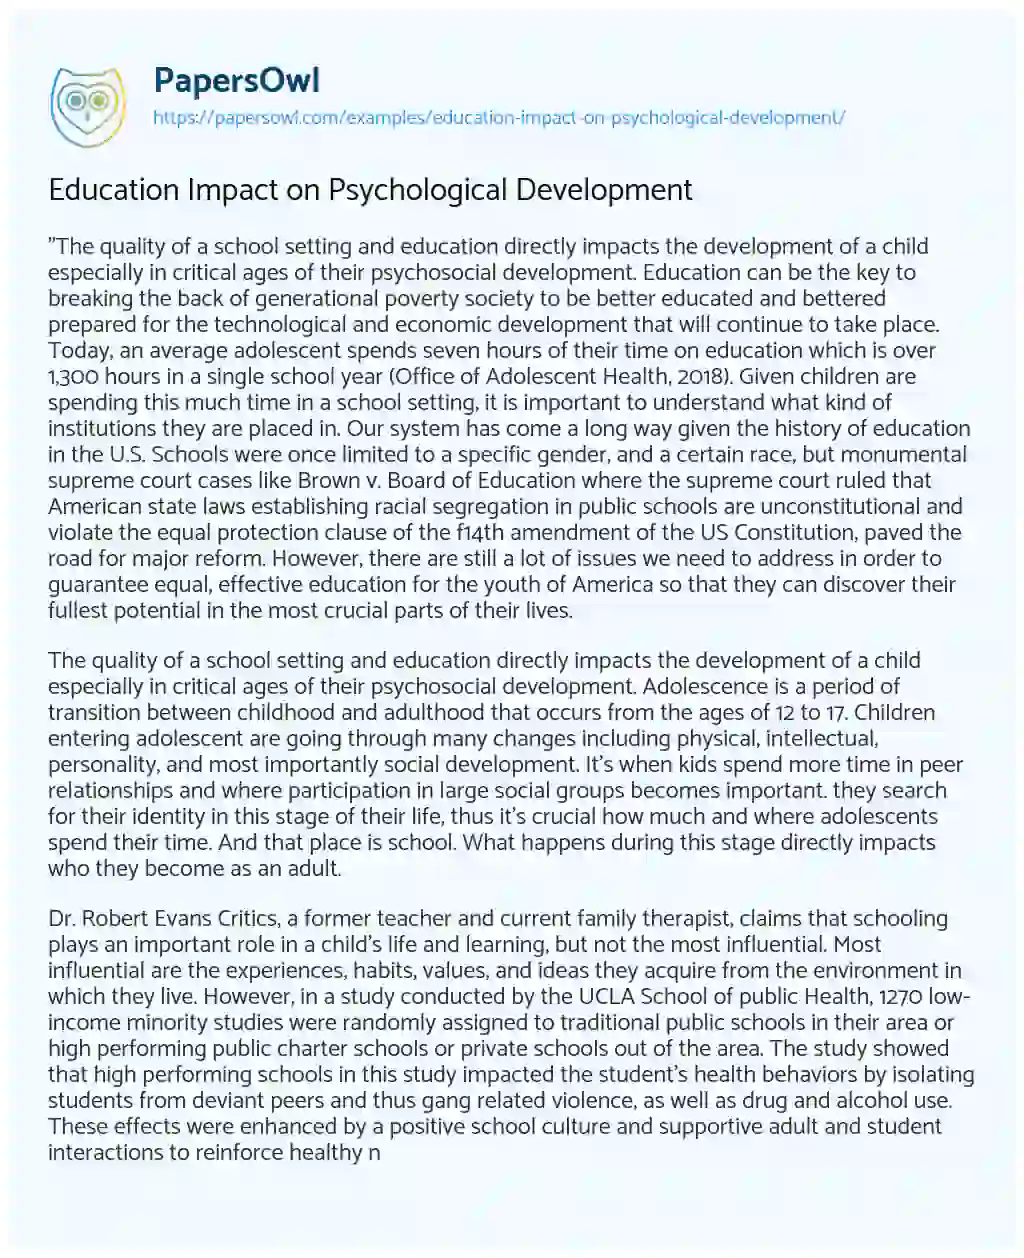 Essay on Education Impact on Psychological Development